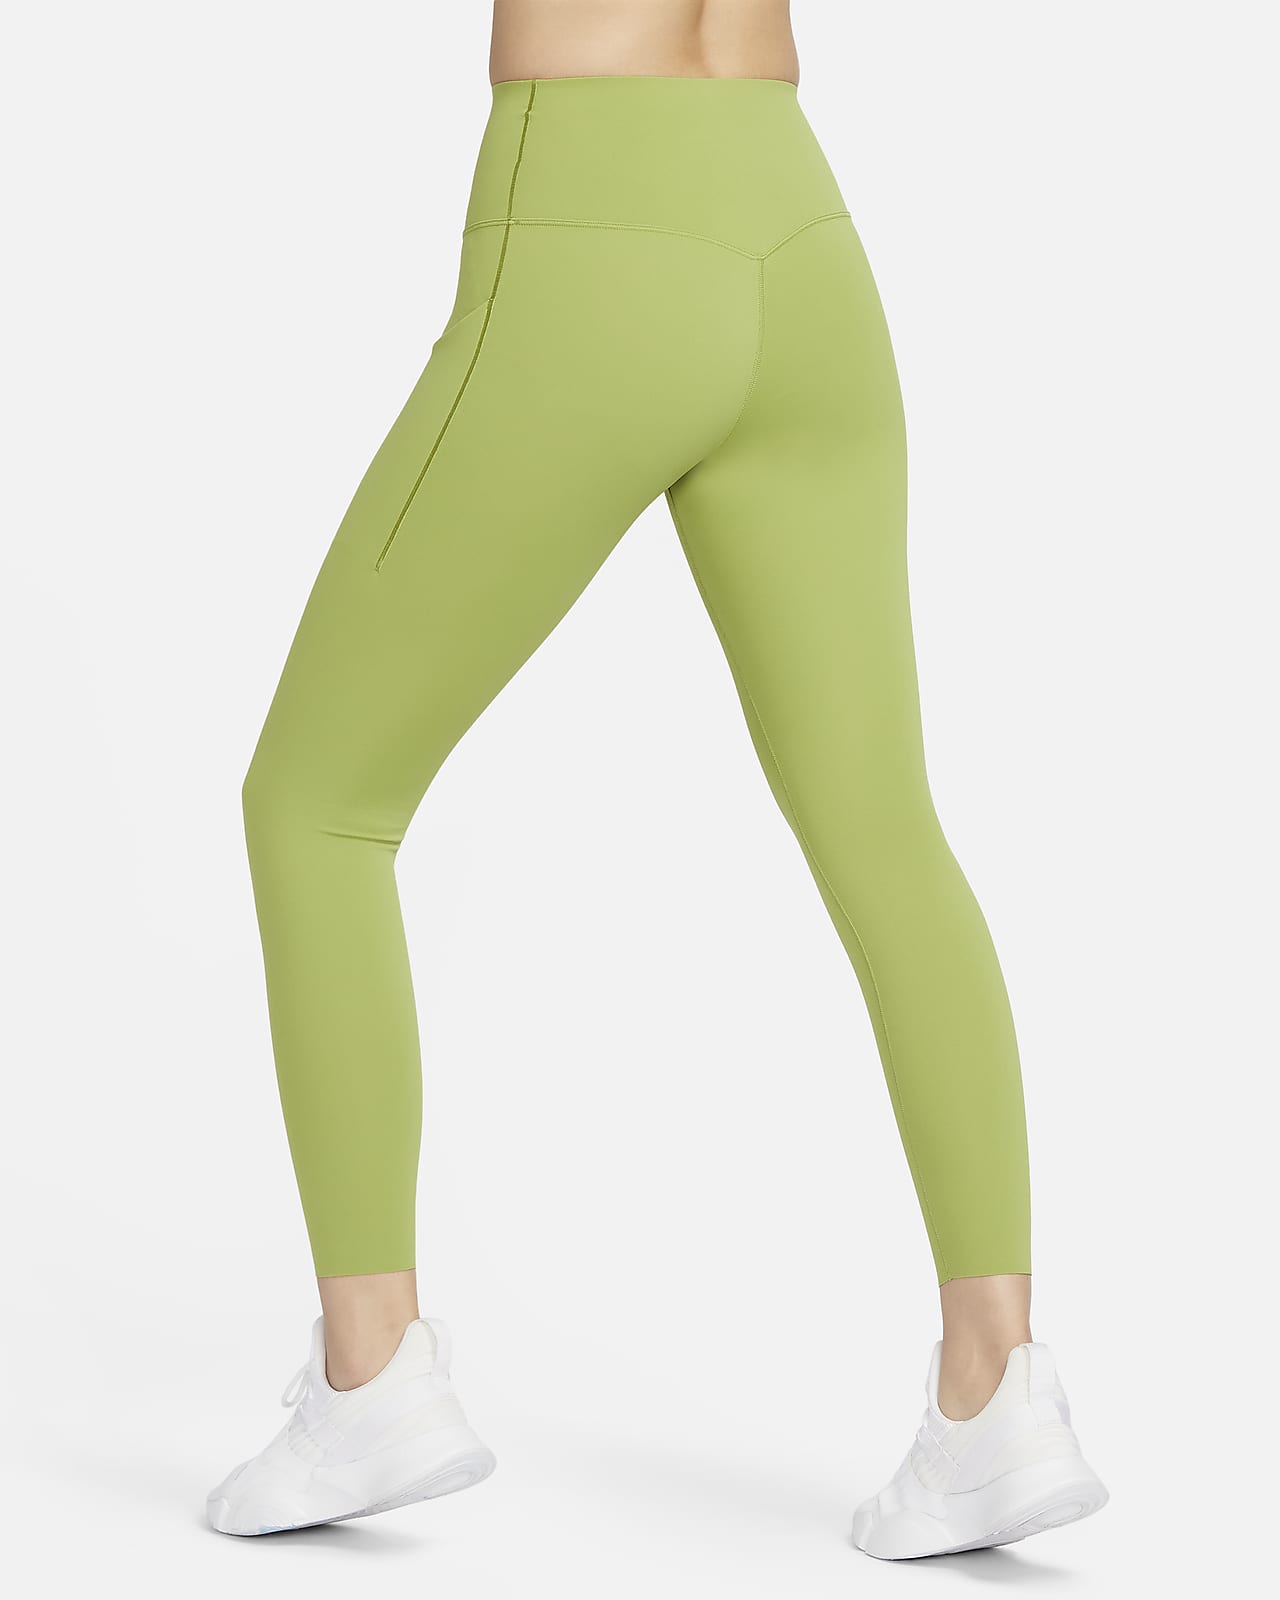 Nike Dri-Fit Leggings Womens Size Medium Neon Green Geometric Capri Running  | eBay